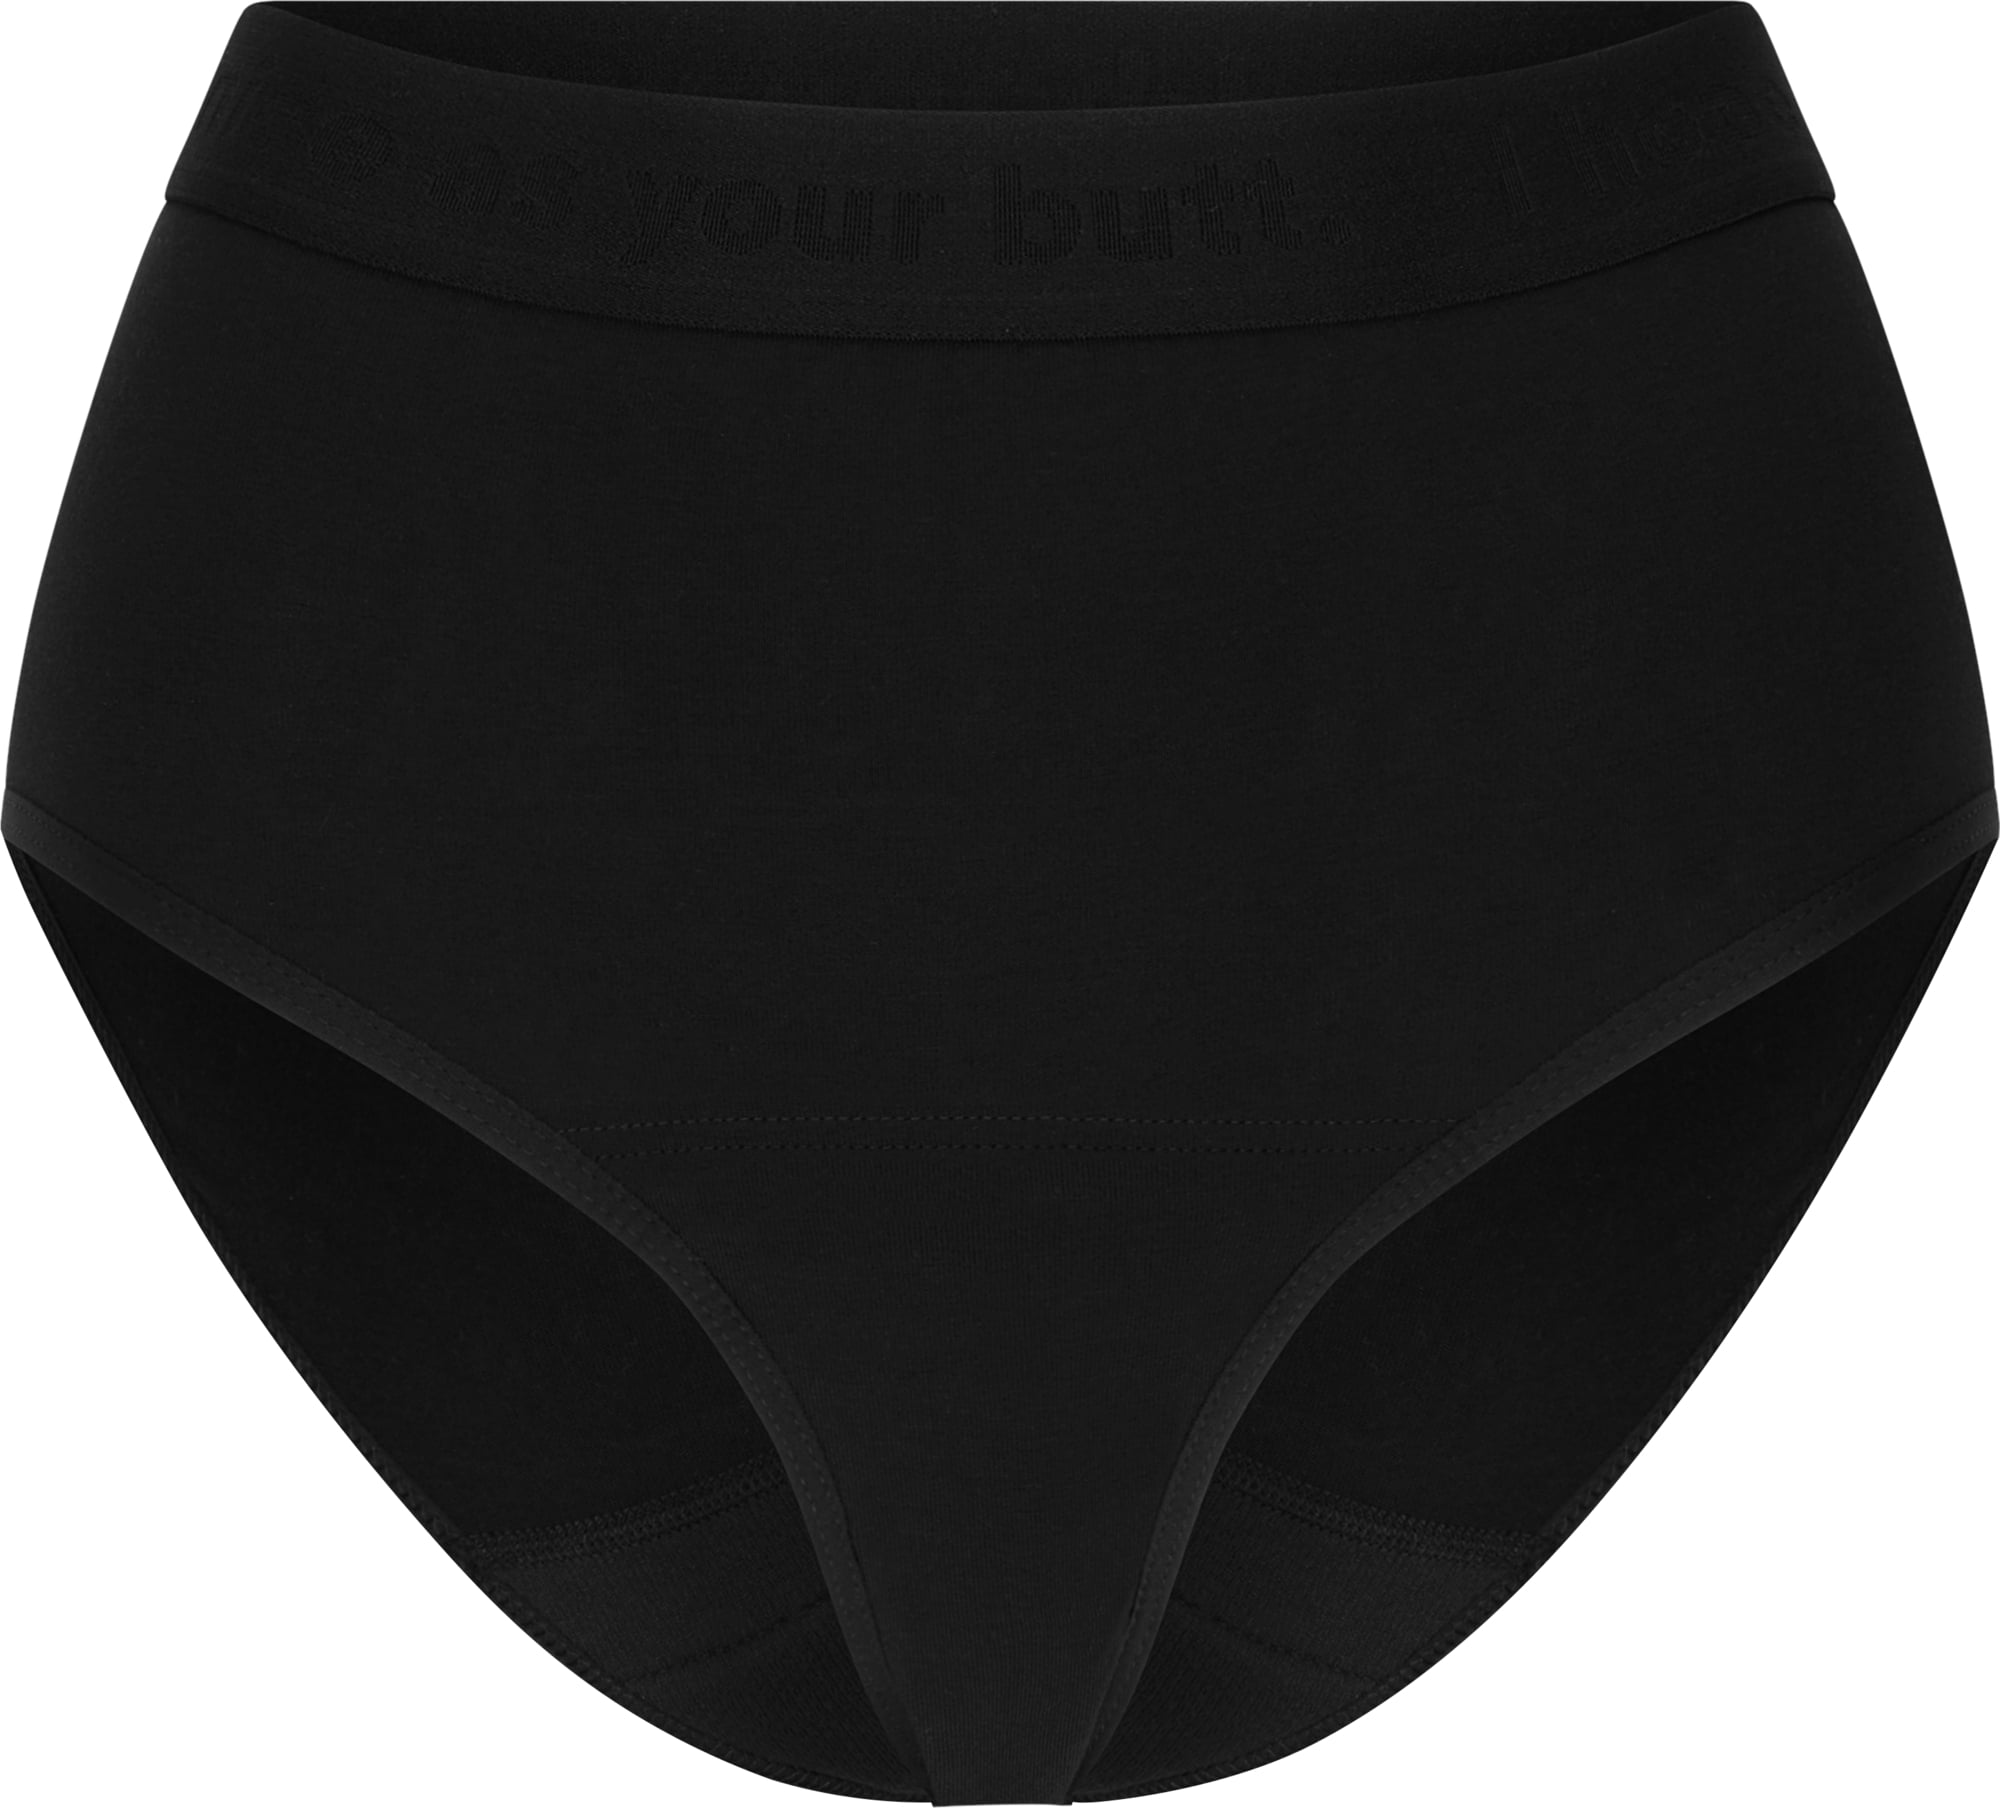 https://ec.nice-cdn.com/upload/image/product/large/default/the-female-company-period-underwear-high-waist-basic-black-extra-strong-56-2044155-en.jpg